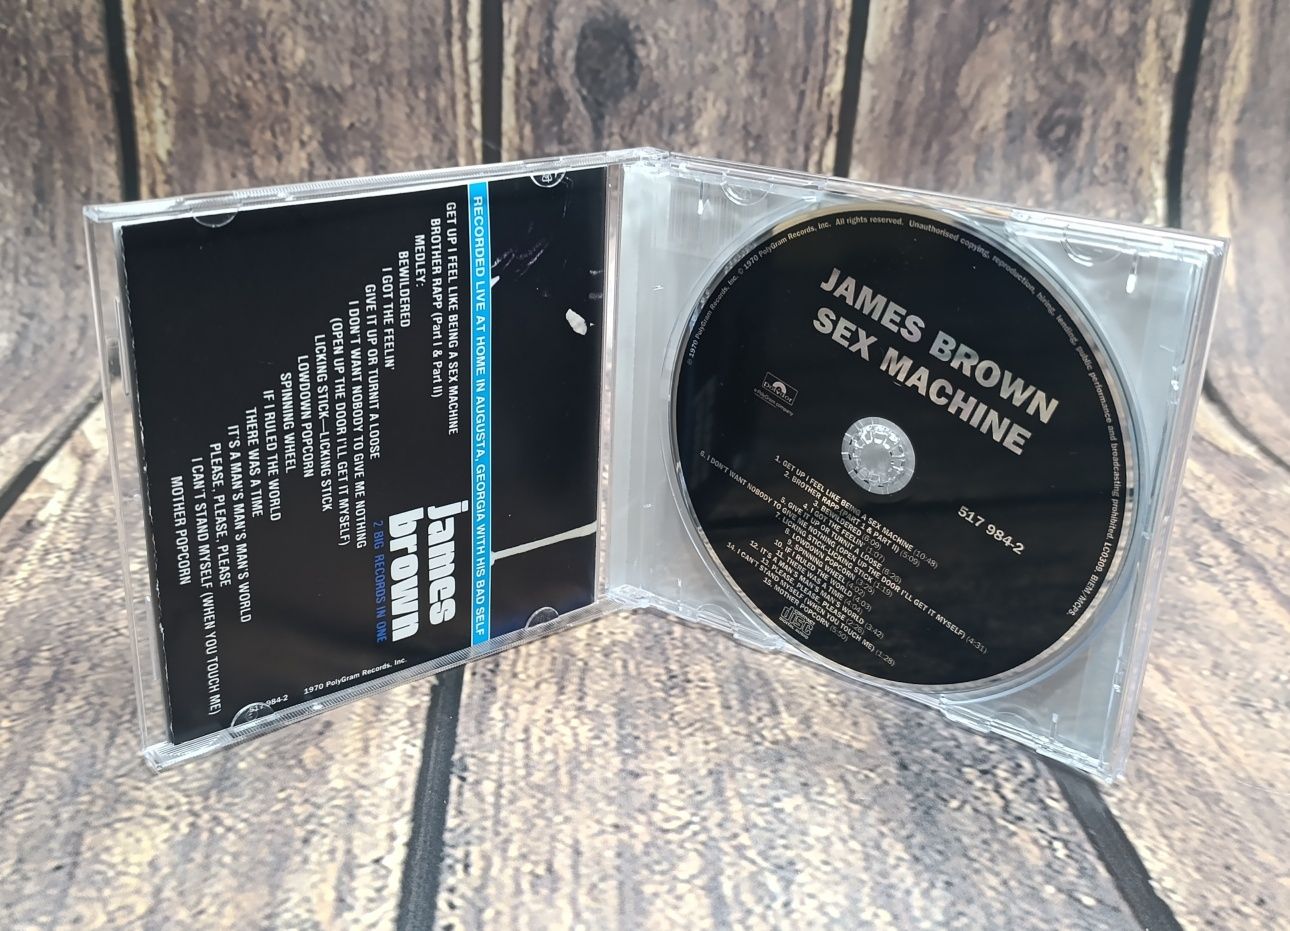 James Brown - Sex Machine - cd